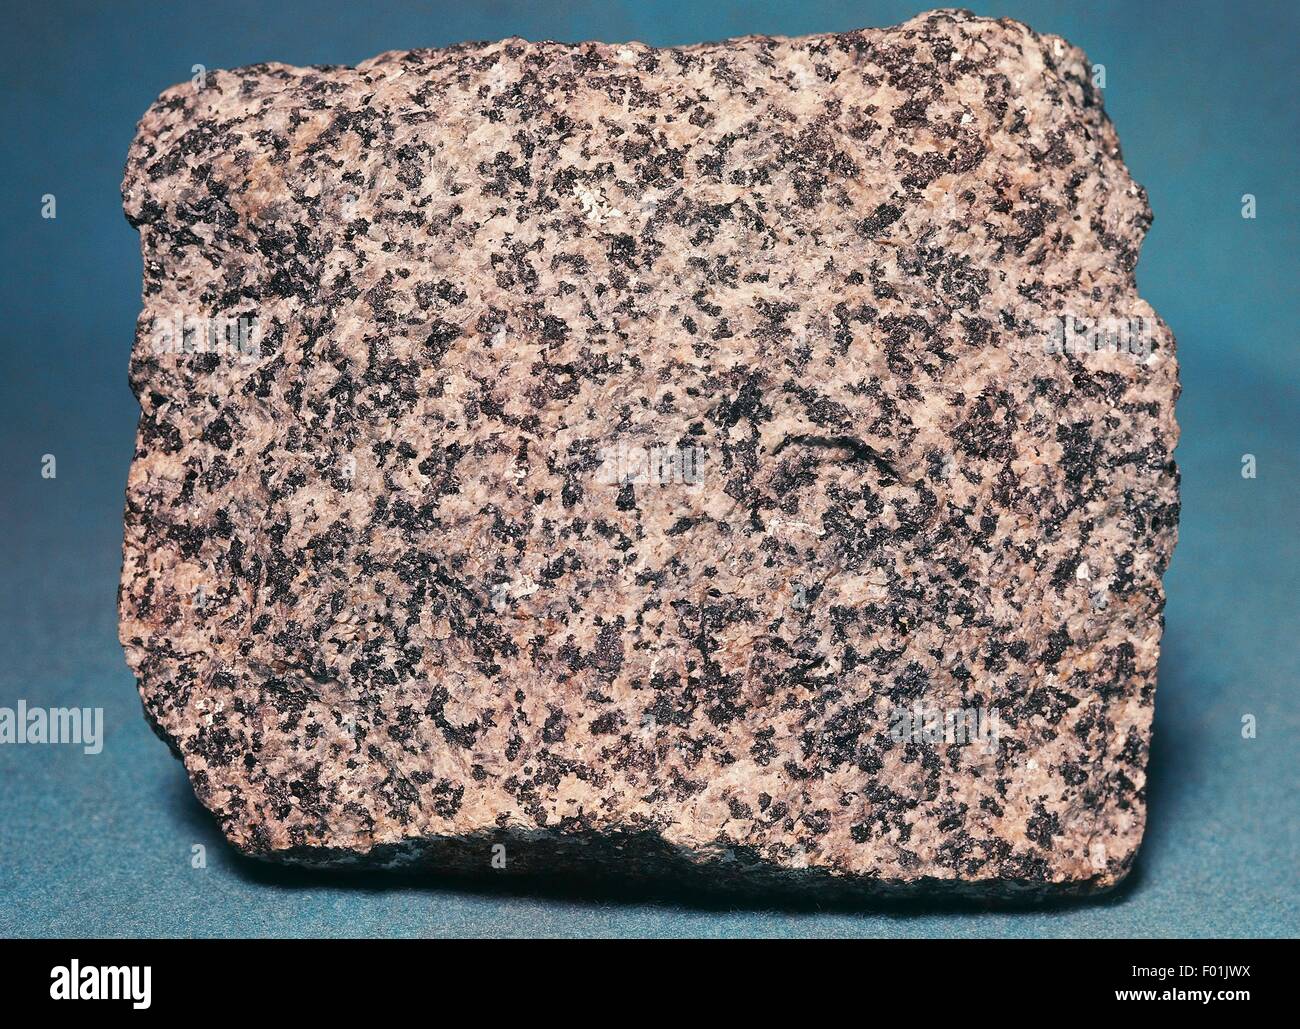 Diorite, intrusive rock. Stock Photo